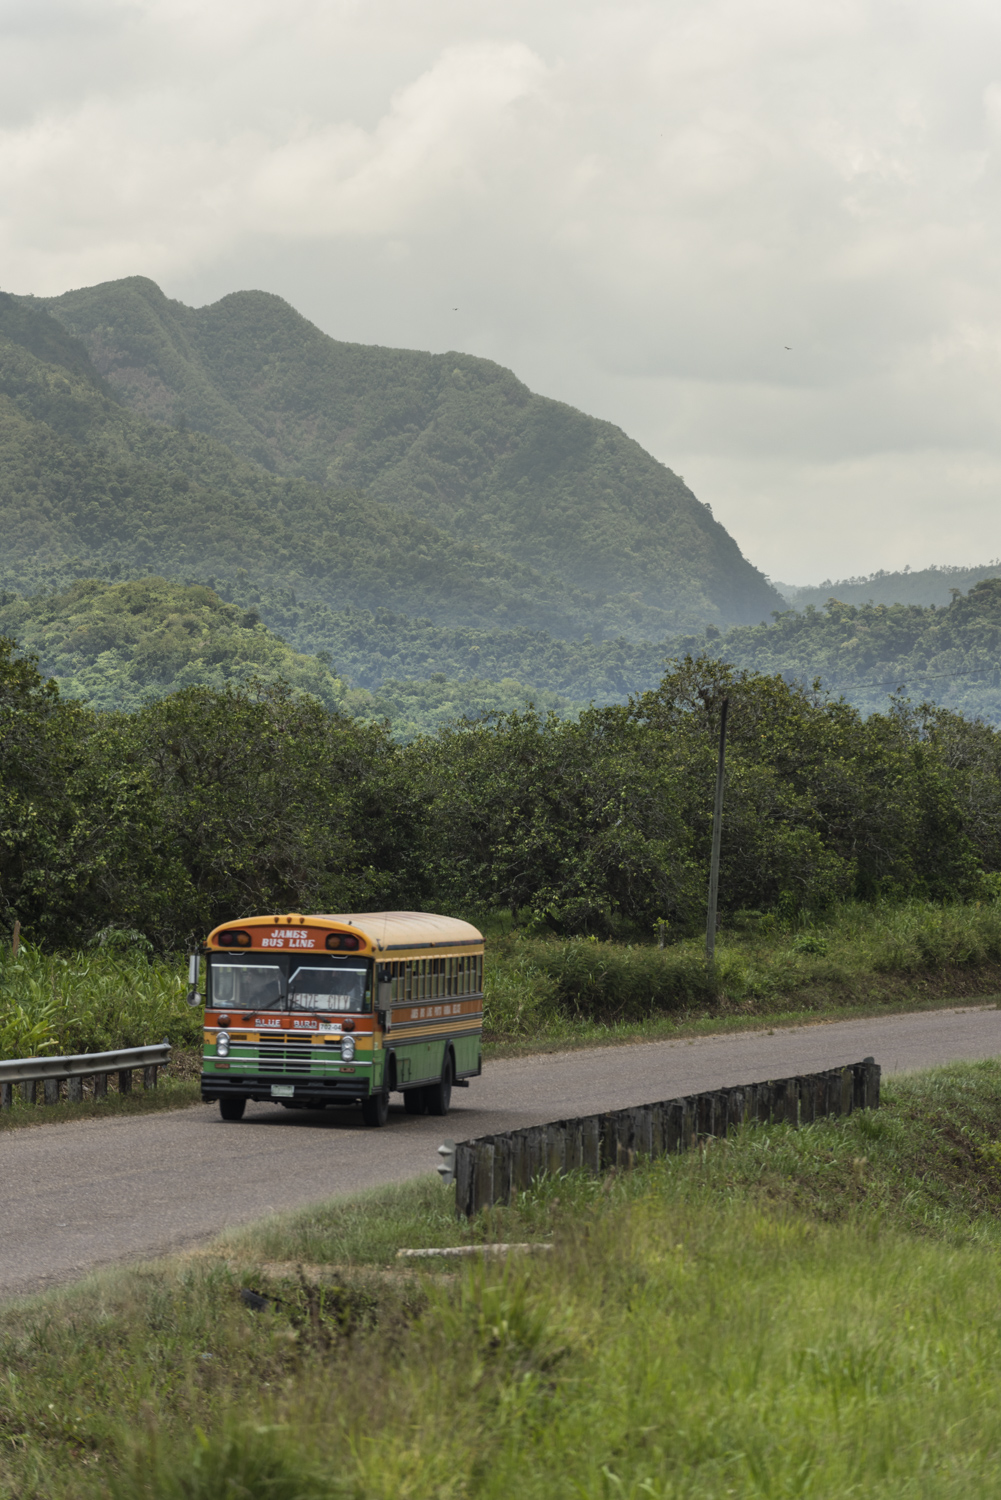 Hummingbird Belize's most popular photography spots according to Instagram